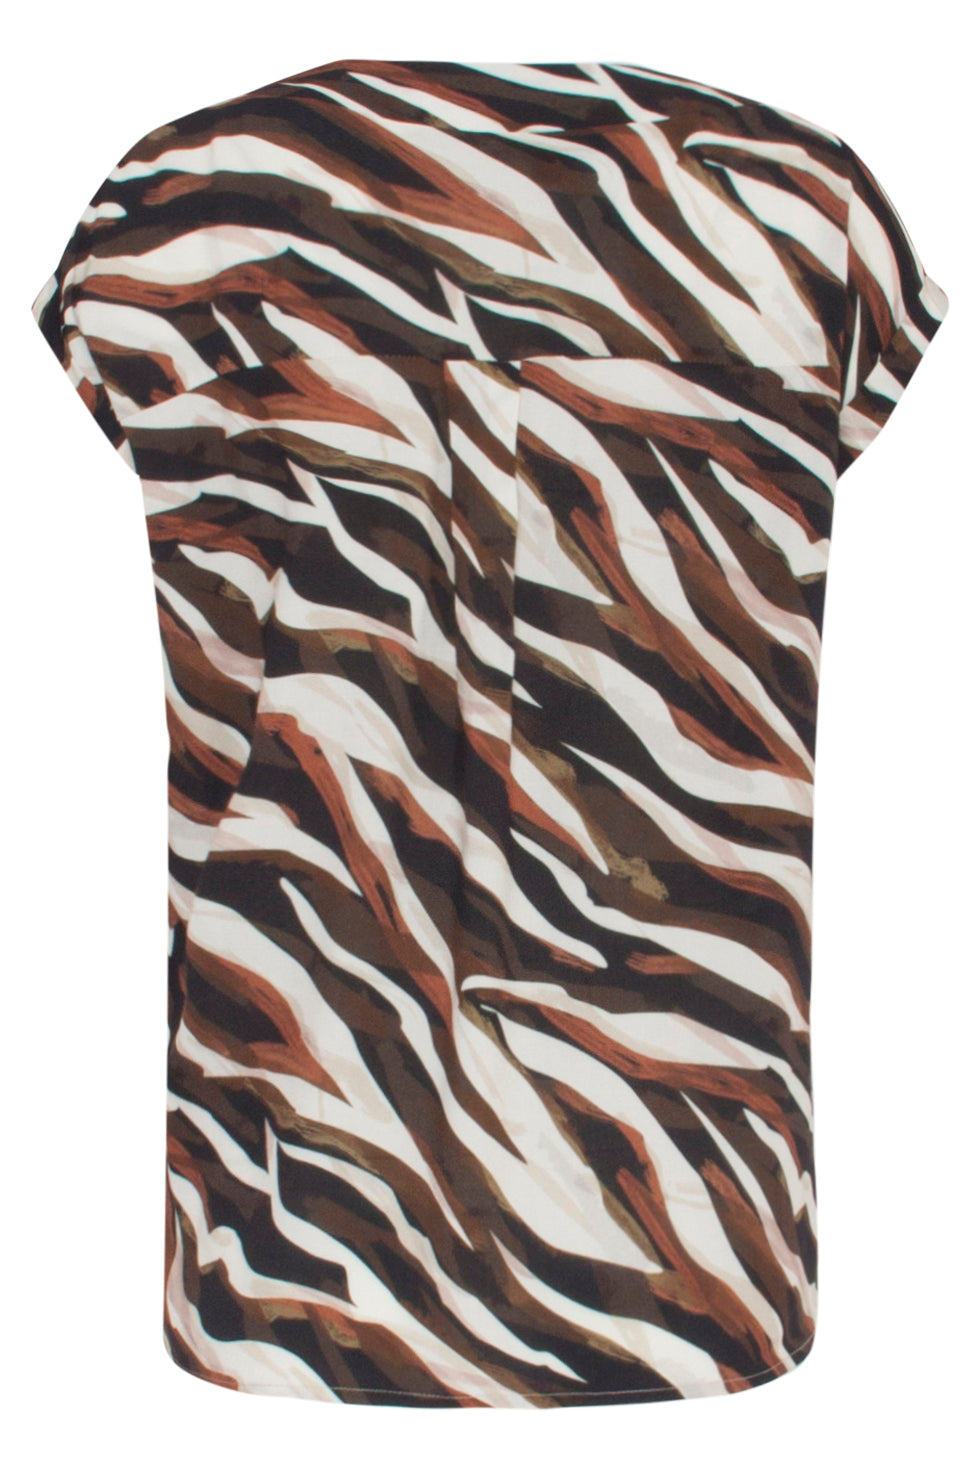 23123 Women Casual Short-Sleeve Stylish Zebra Print Top